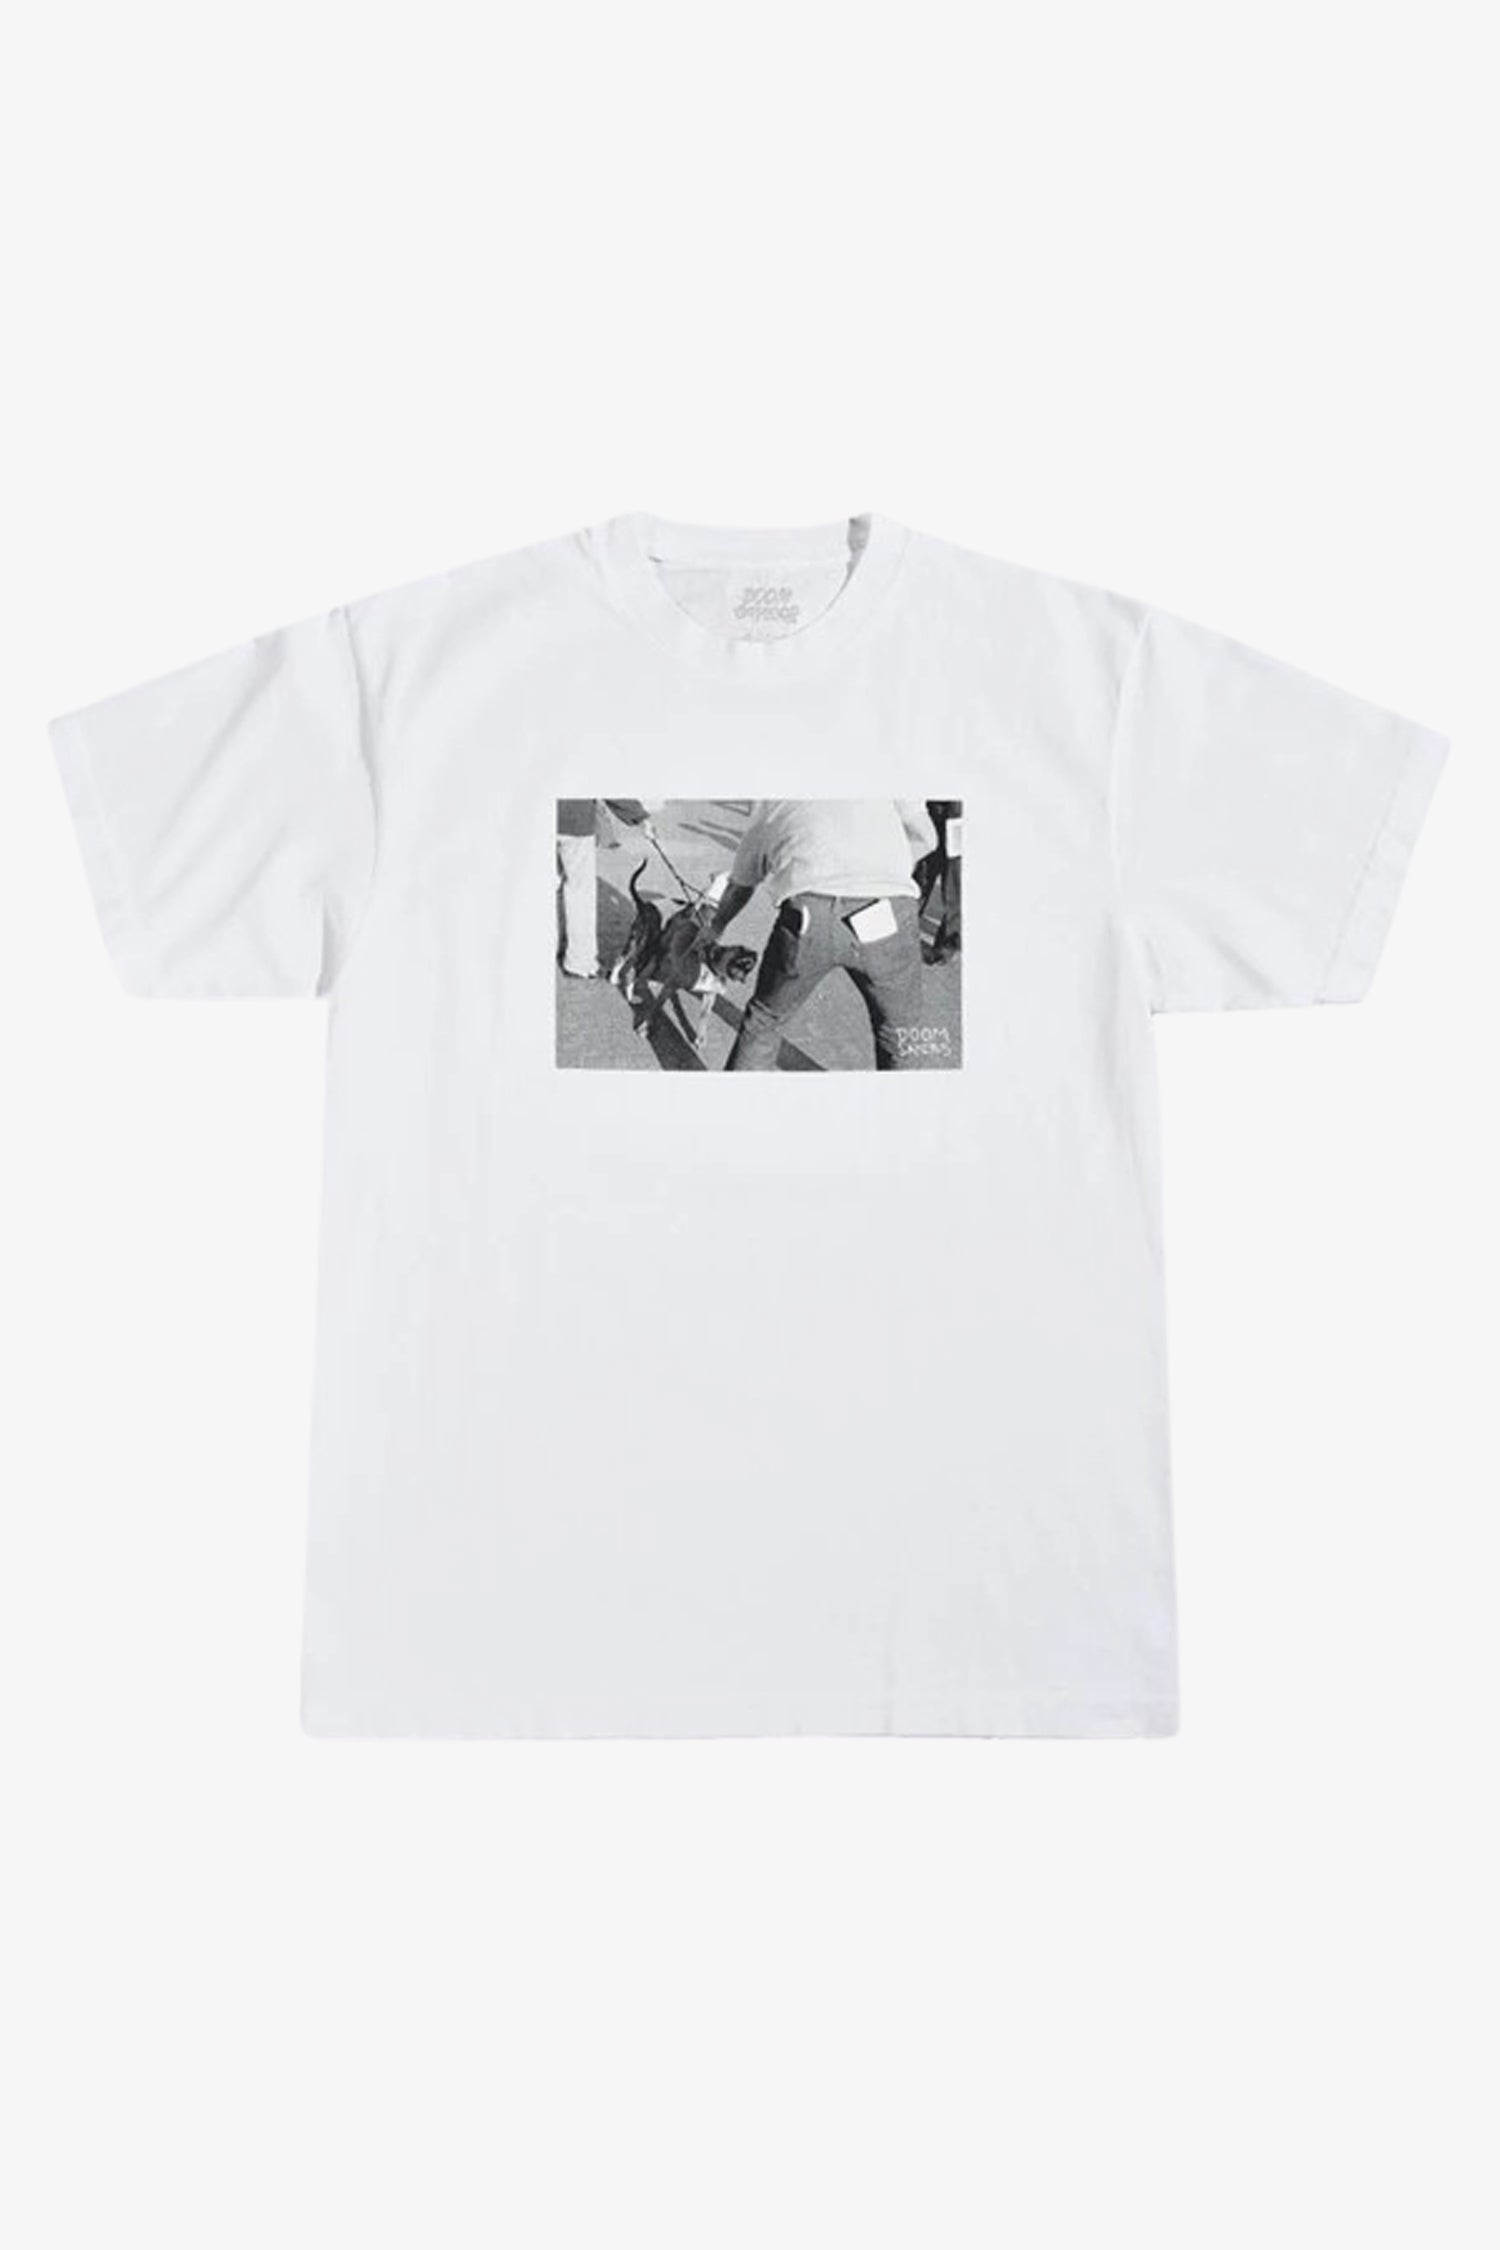 Selectshop FRAME - Doomsayers Club Pitbull Tee T-Shirt Dubai